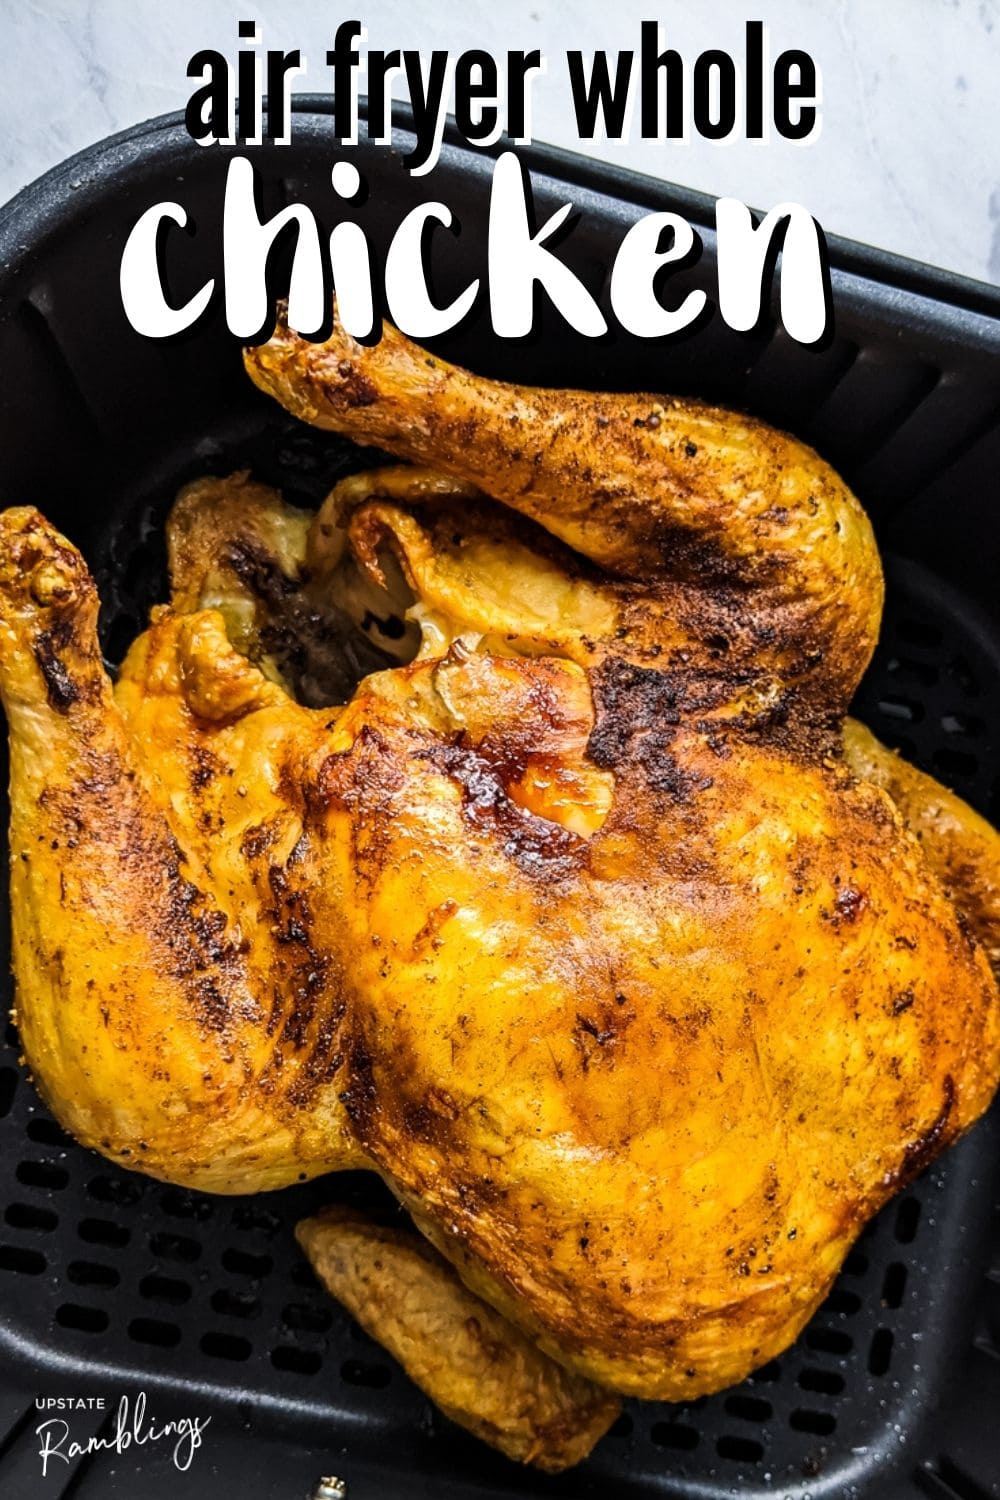 https://www.upstateramblings.com/wp-content/uploads/2021/01/air-fryer-whole-chicken.jpg